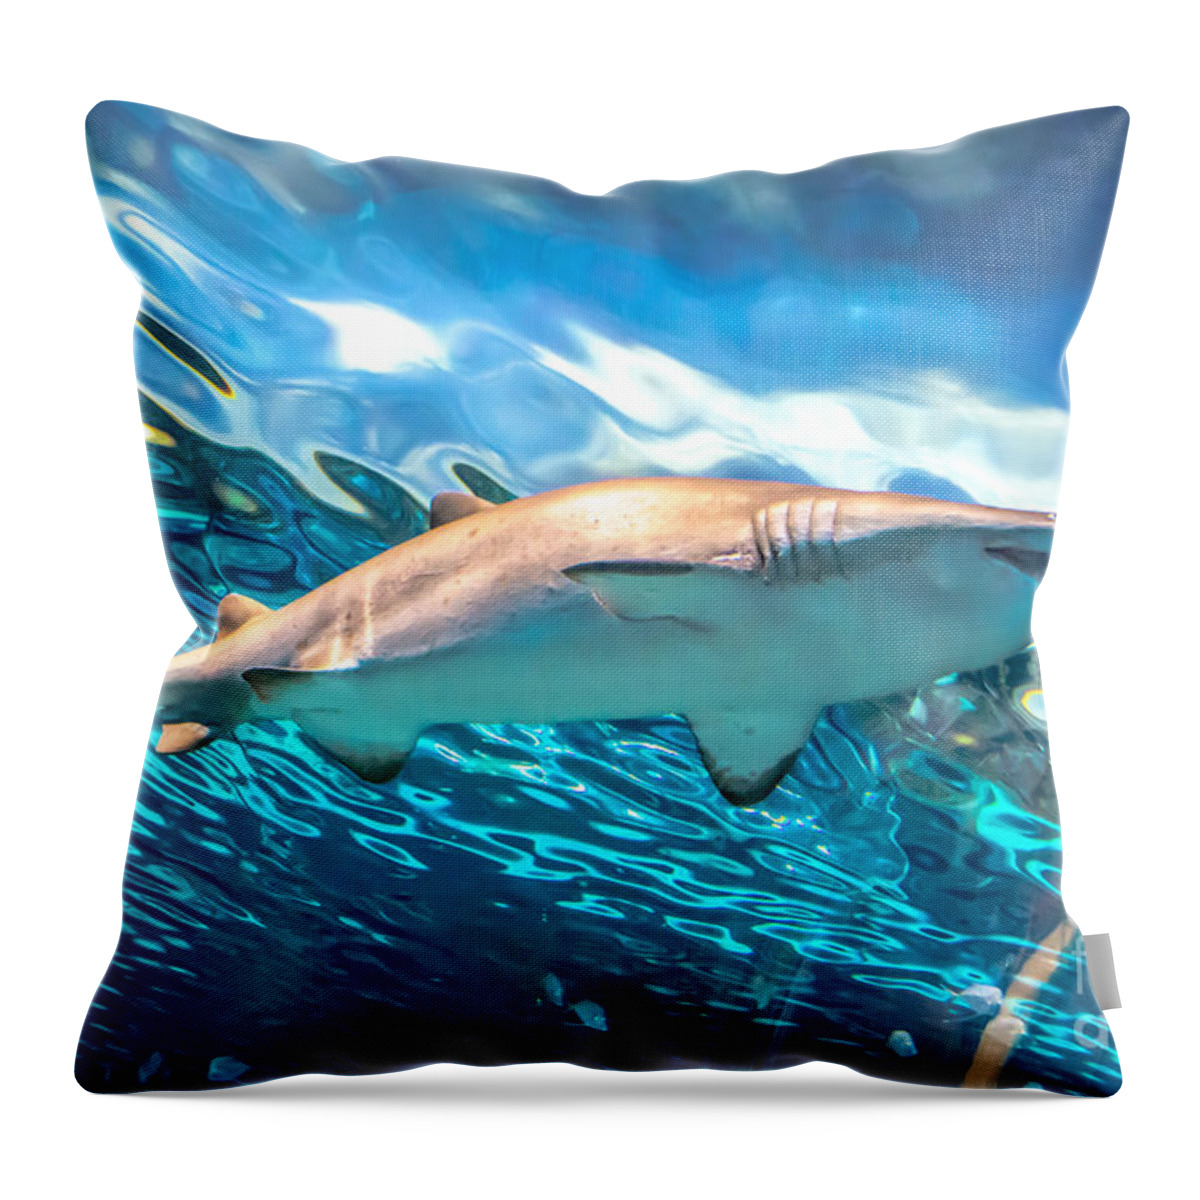 Shark Throw Pillow featuring the photograph Jaws by Cheryl Baxter